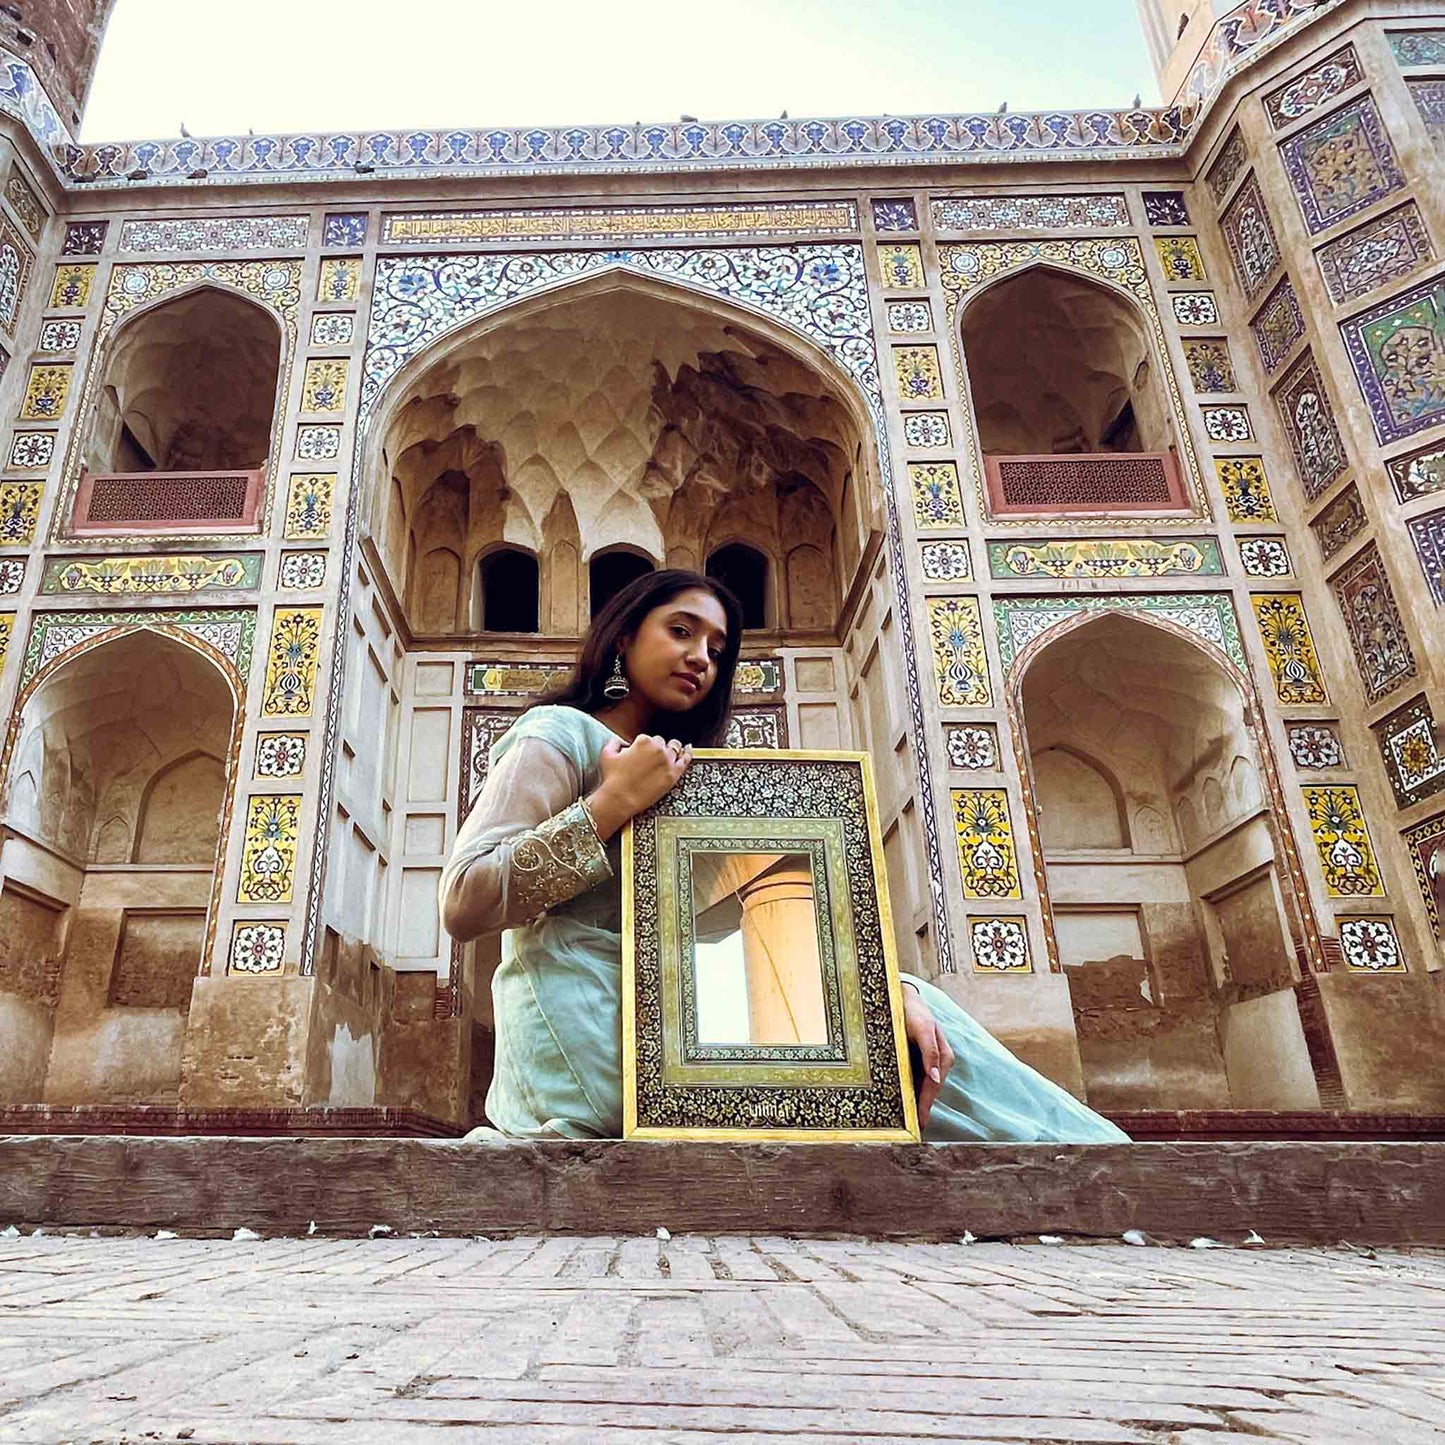 Khusro-Bagh-Large-Mirror-mughal-miniature